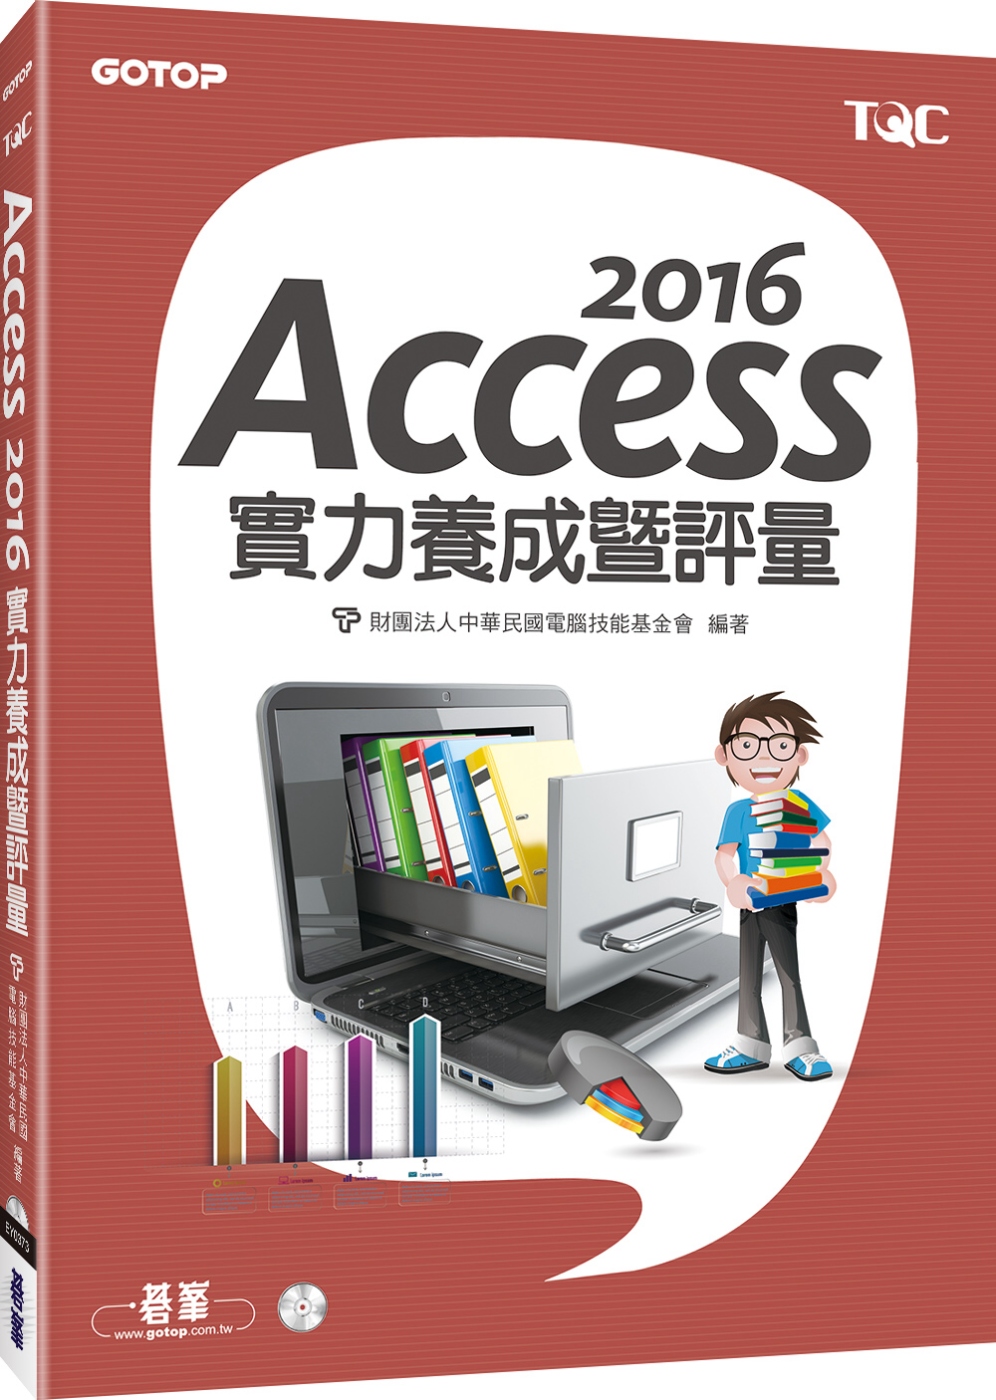 Access 2...